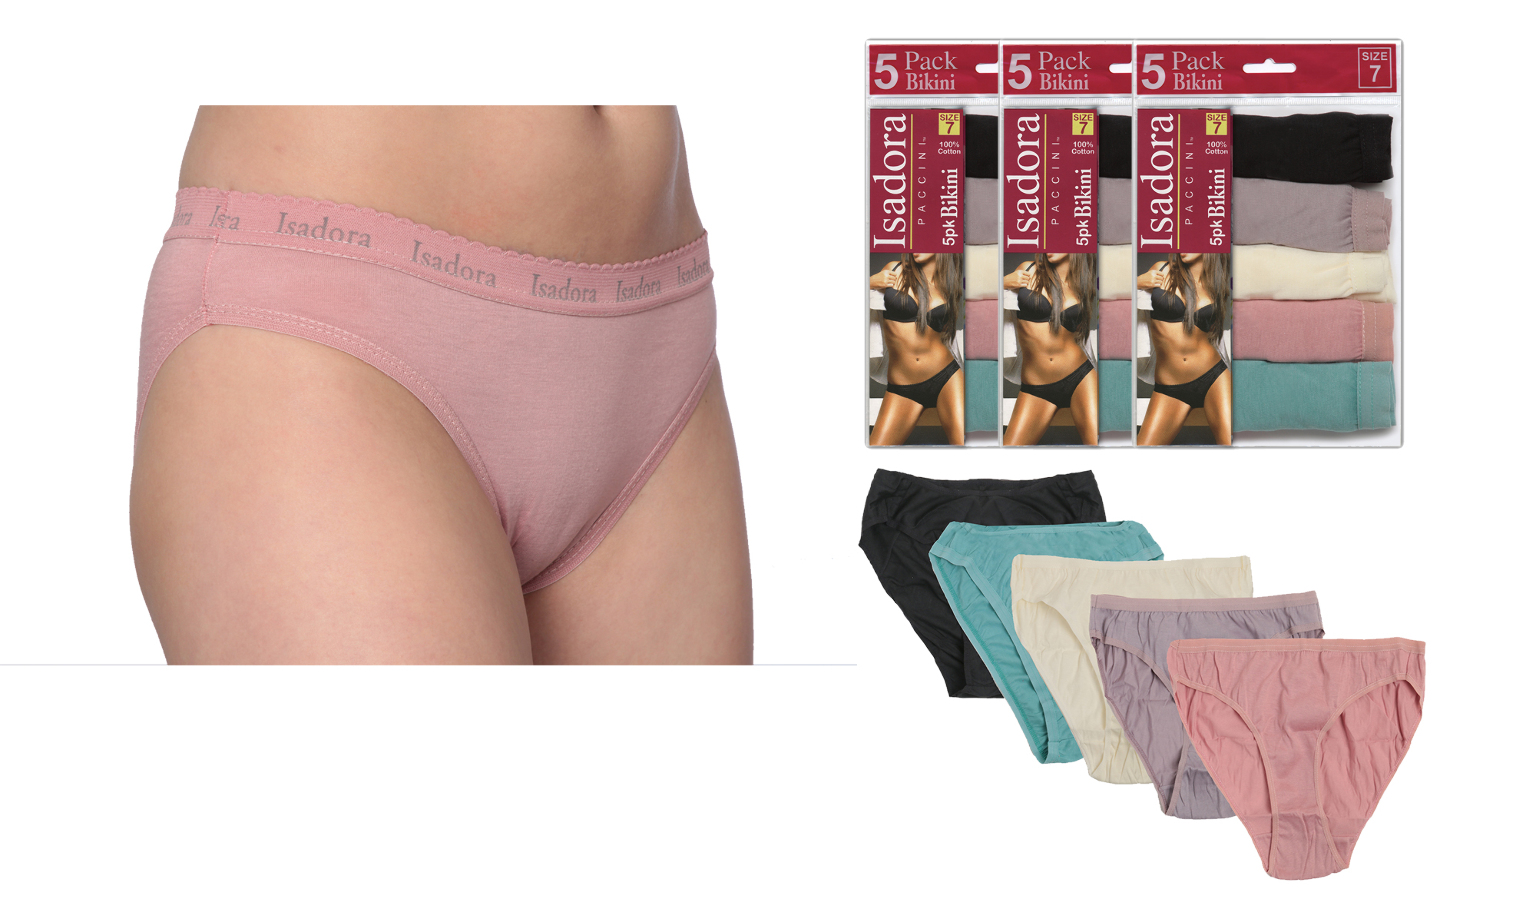 Wholesale Women's Hip Hugger Panties in 6 Colors - DollarDays